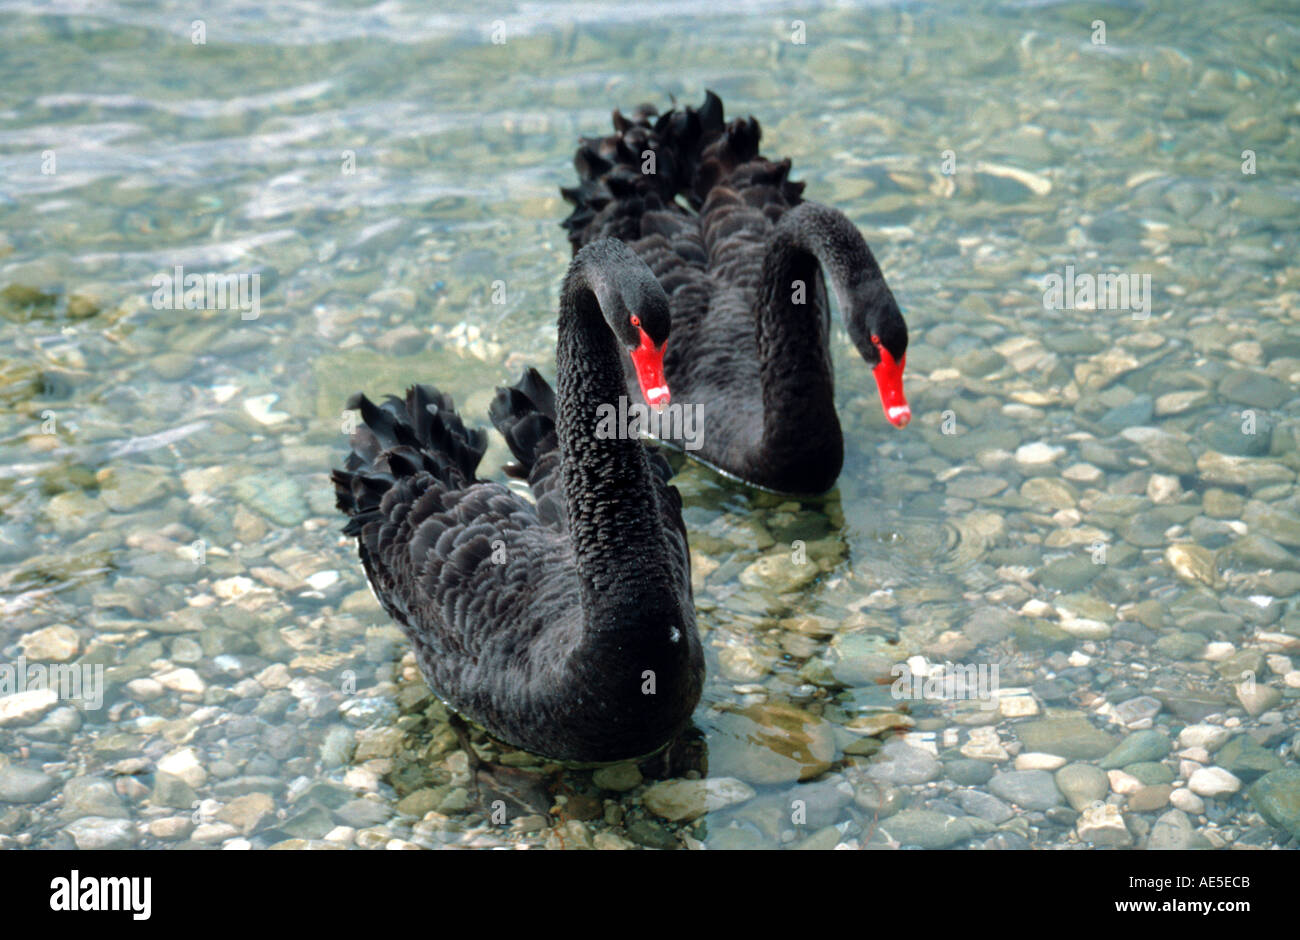 Black swans cygnus atratus at the Bavarian Lake Starnberg near Munich Germany Stock Photo